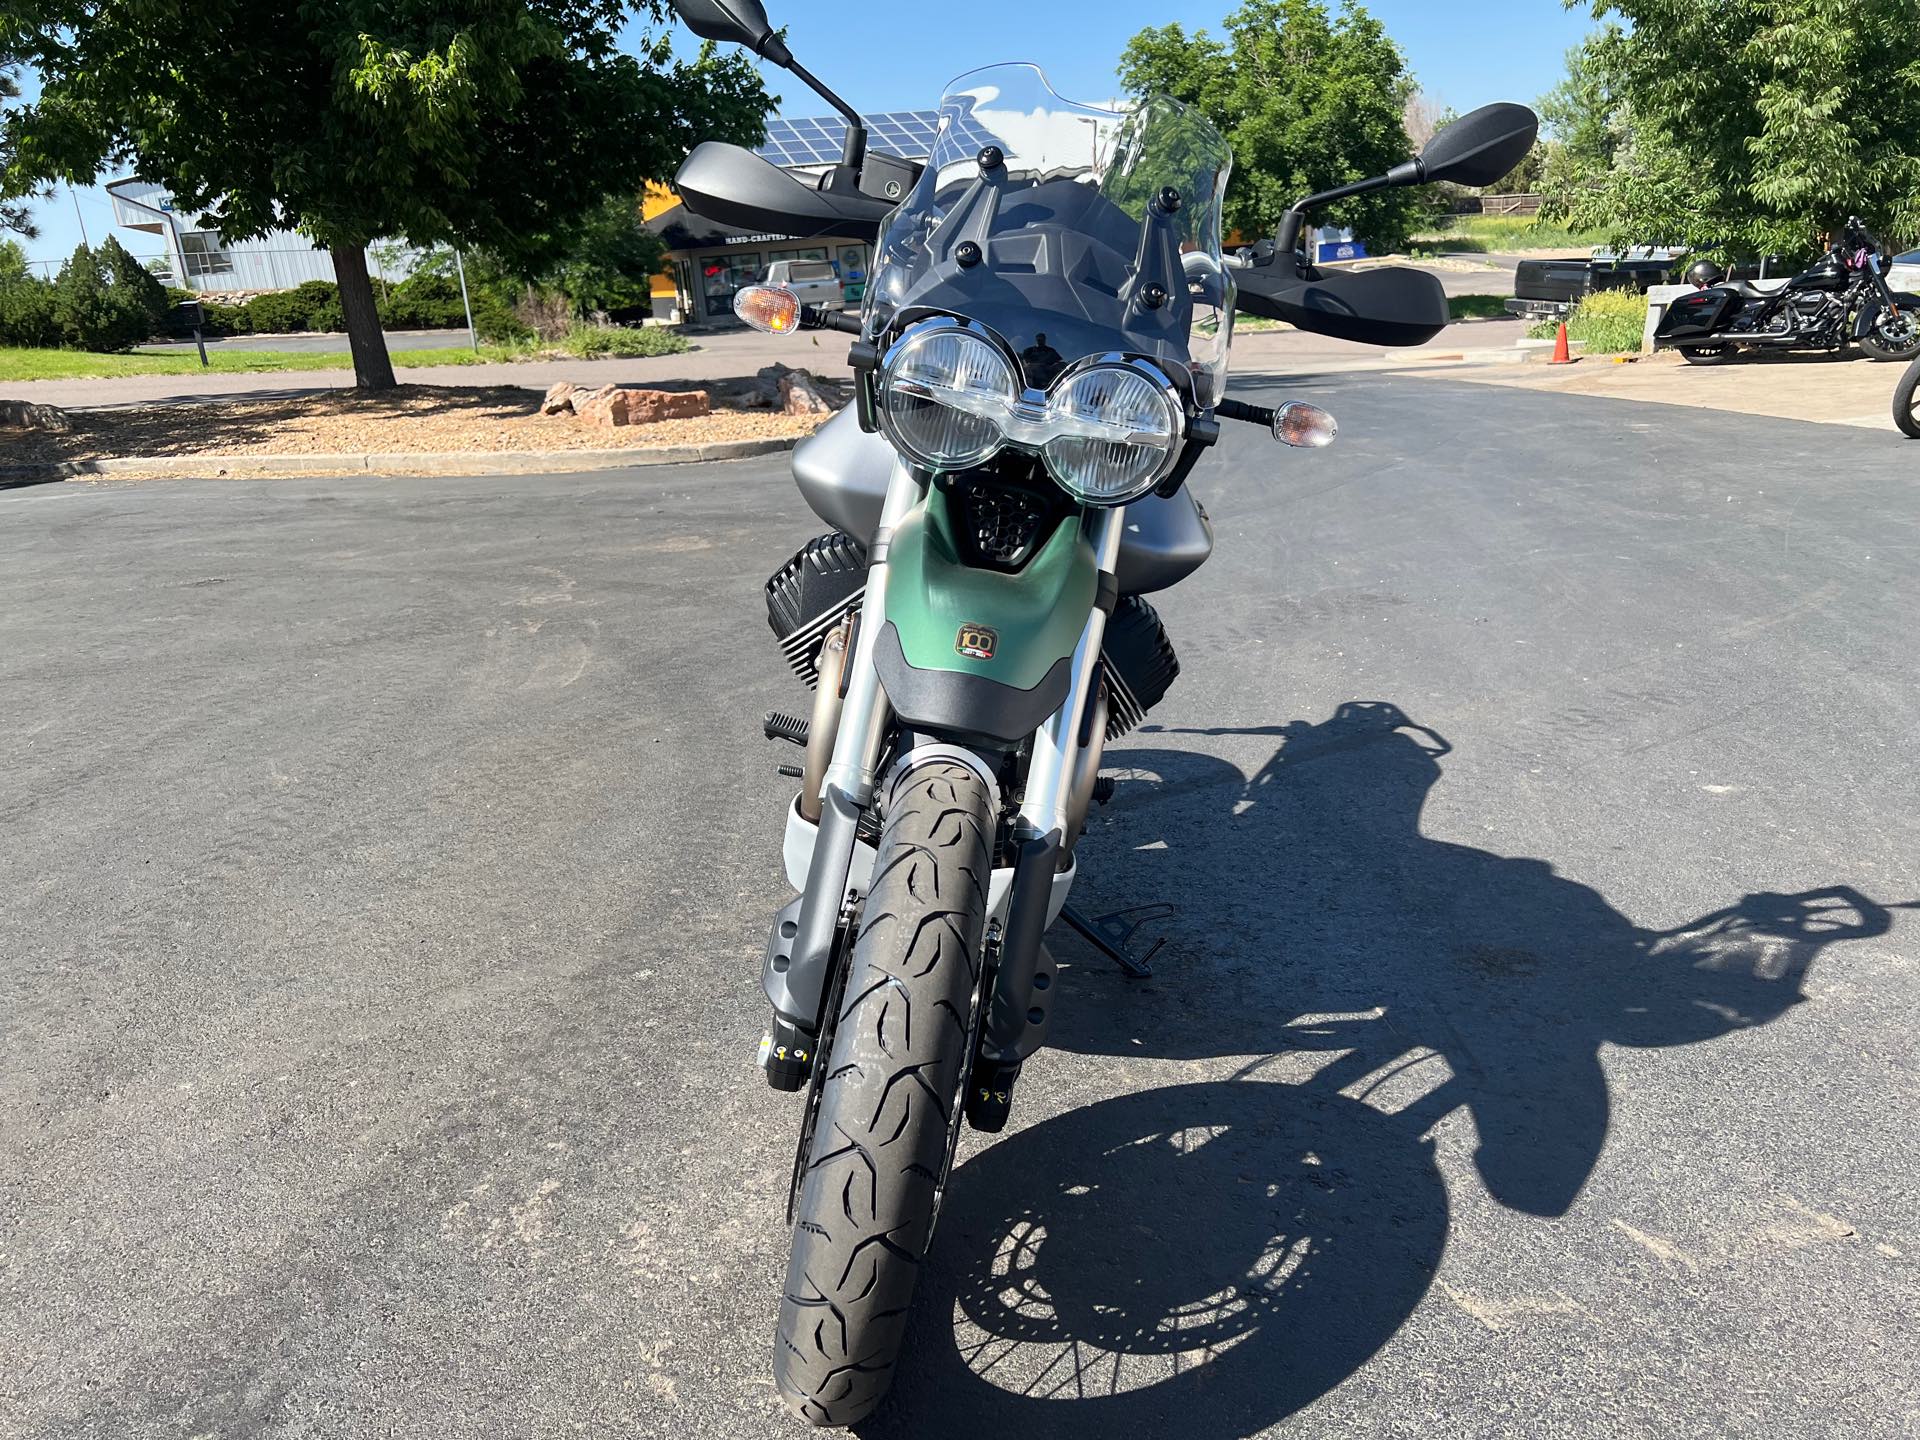 2022 Moto Guzzi V85 TT Centenario E5 at Aces Motorcycles - Fort Collins